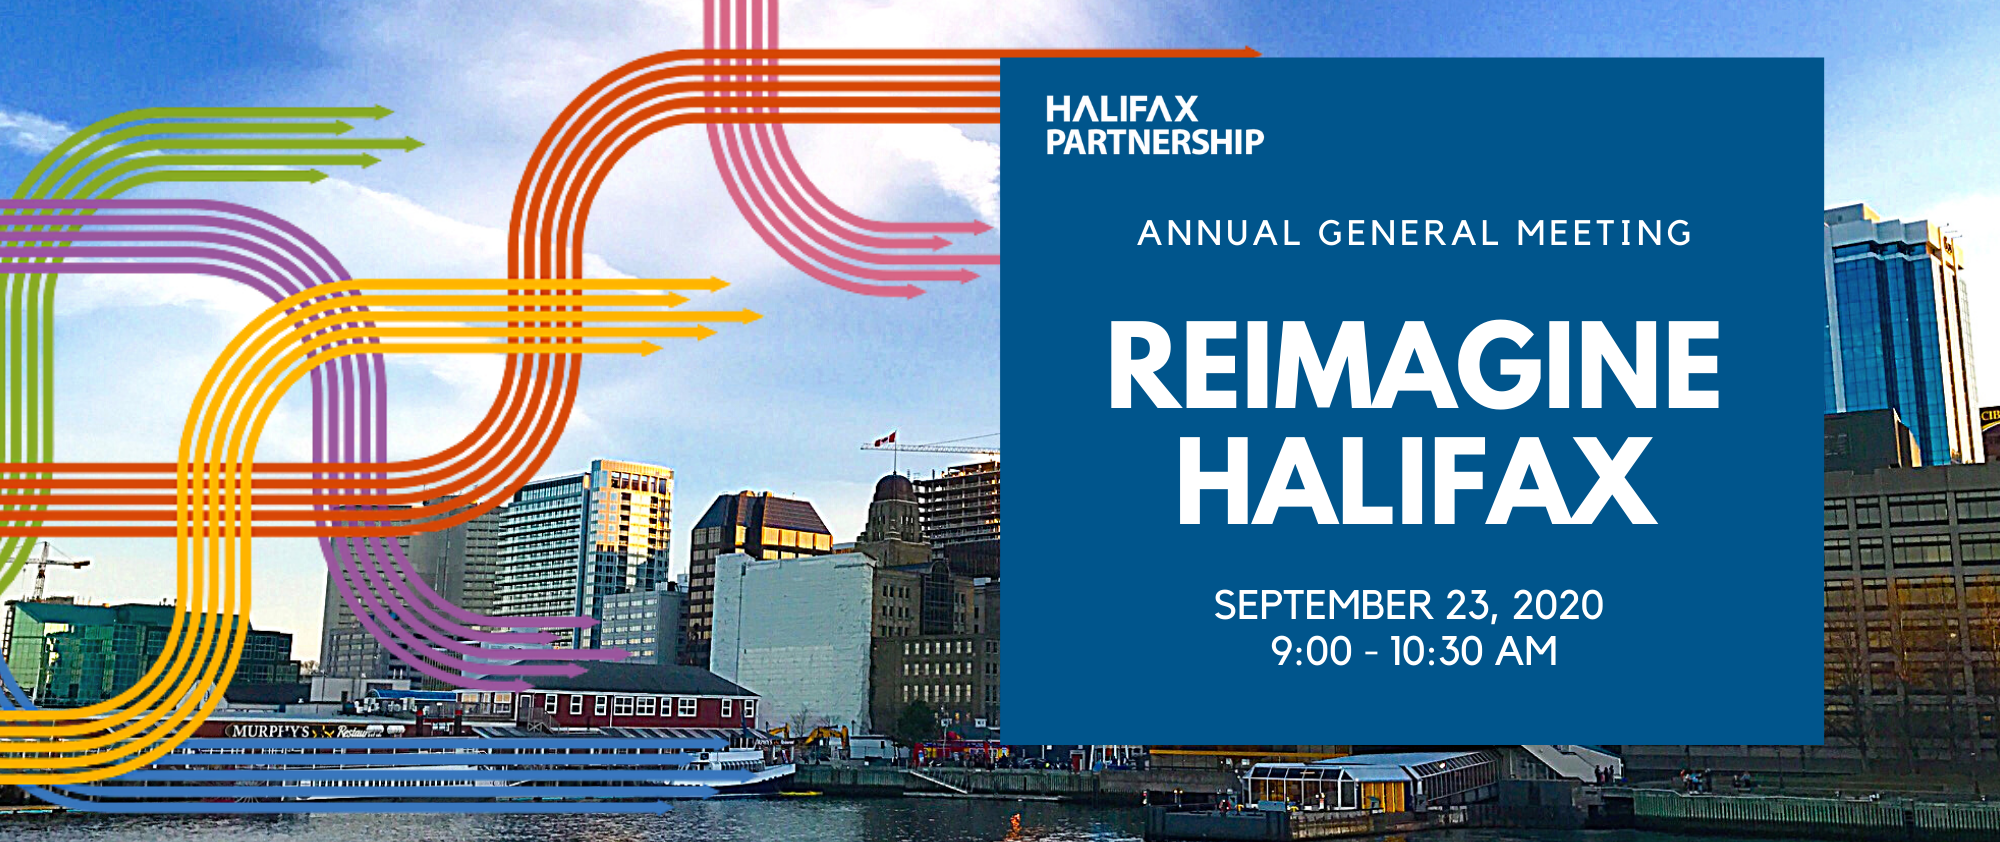 Reimagine-Halifax-Partnership